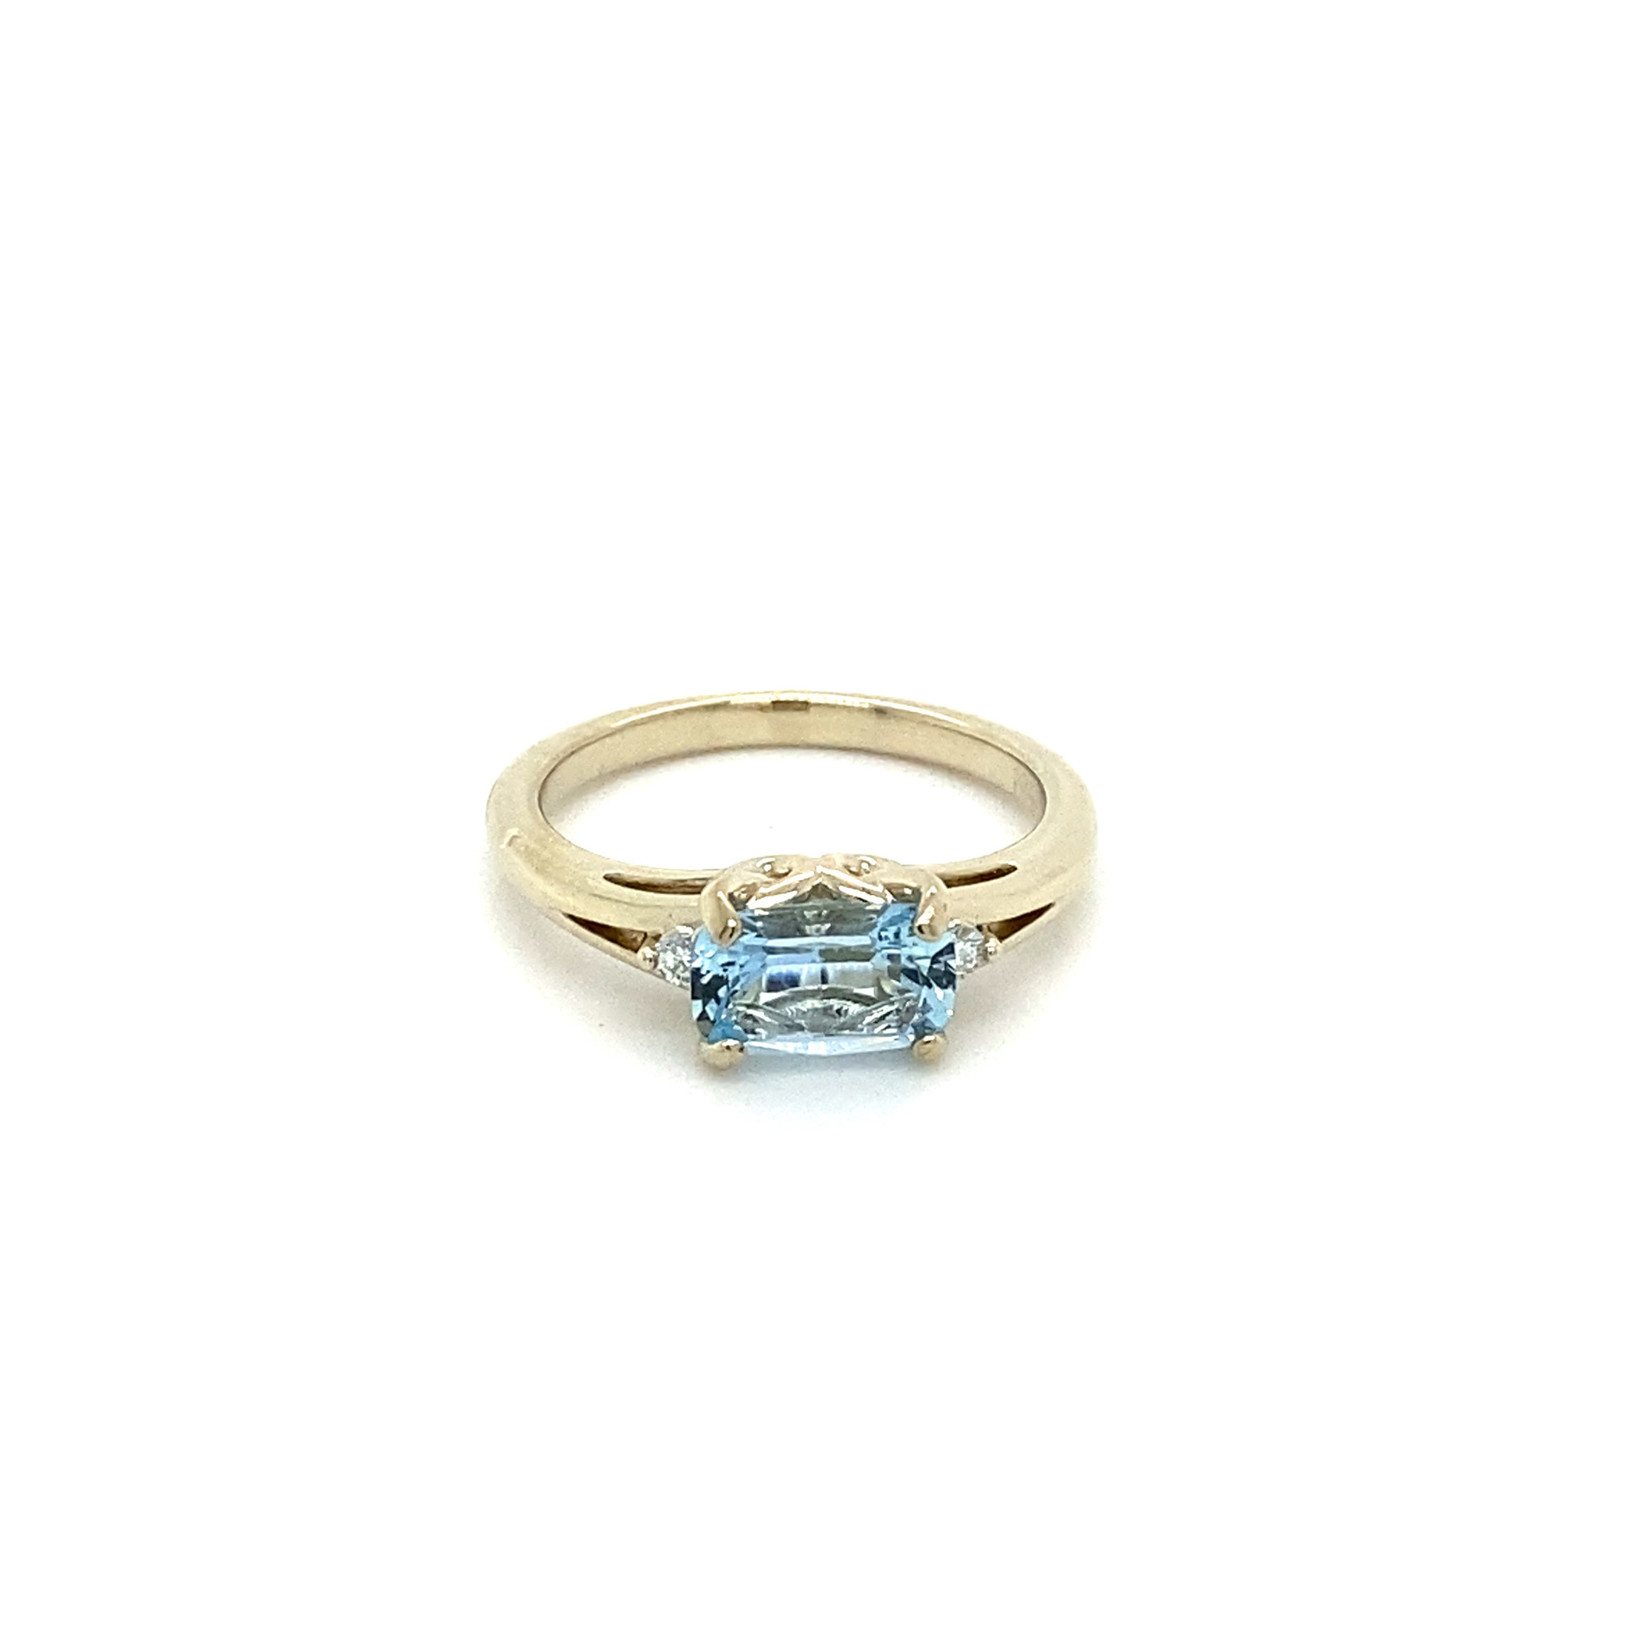 14k White Gold Nigerian Aqua Ring with Diamond Accents Sz 6.75